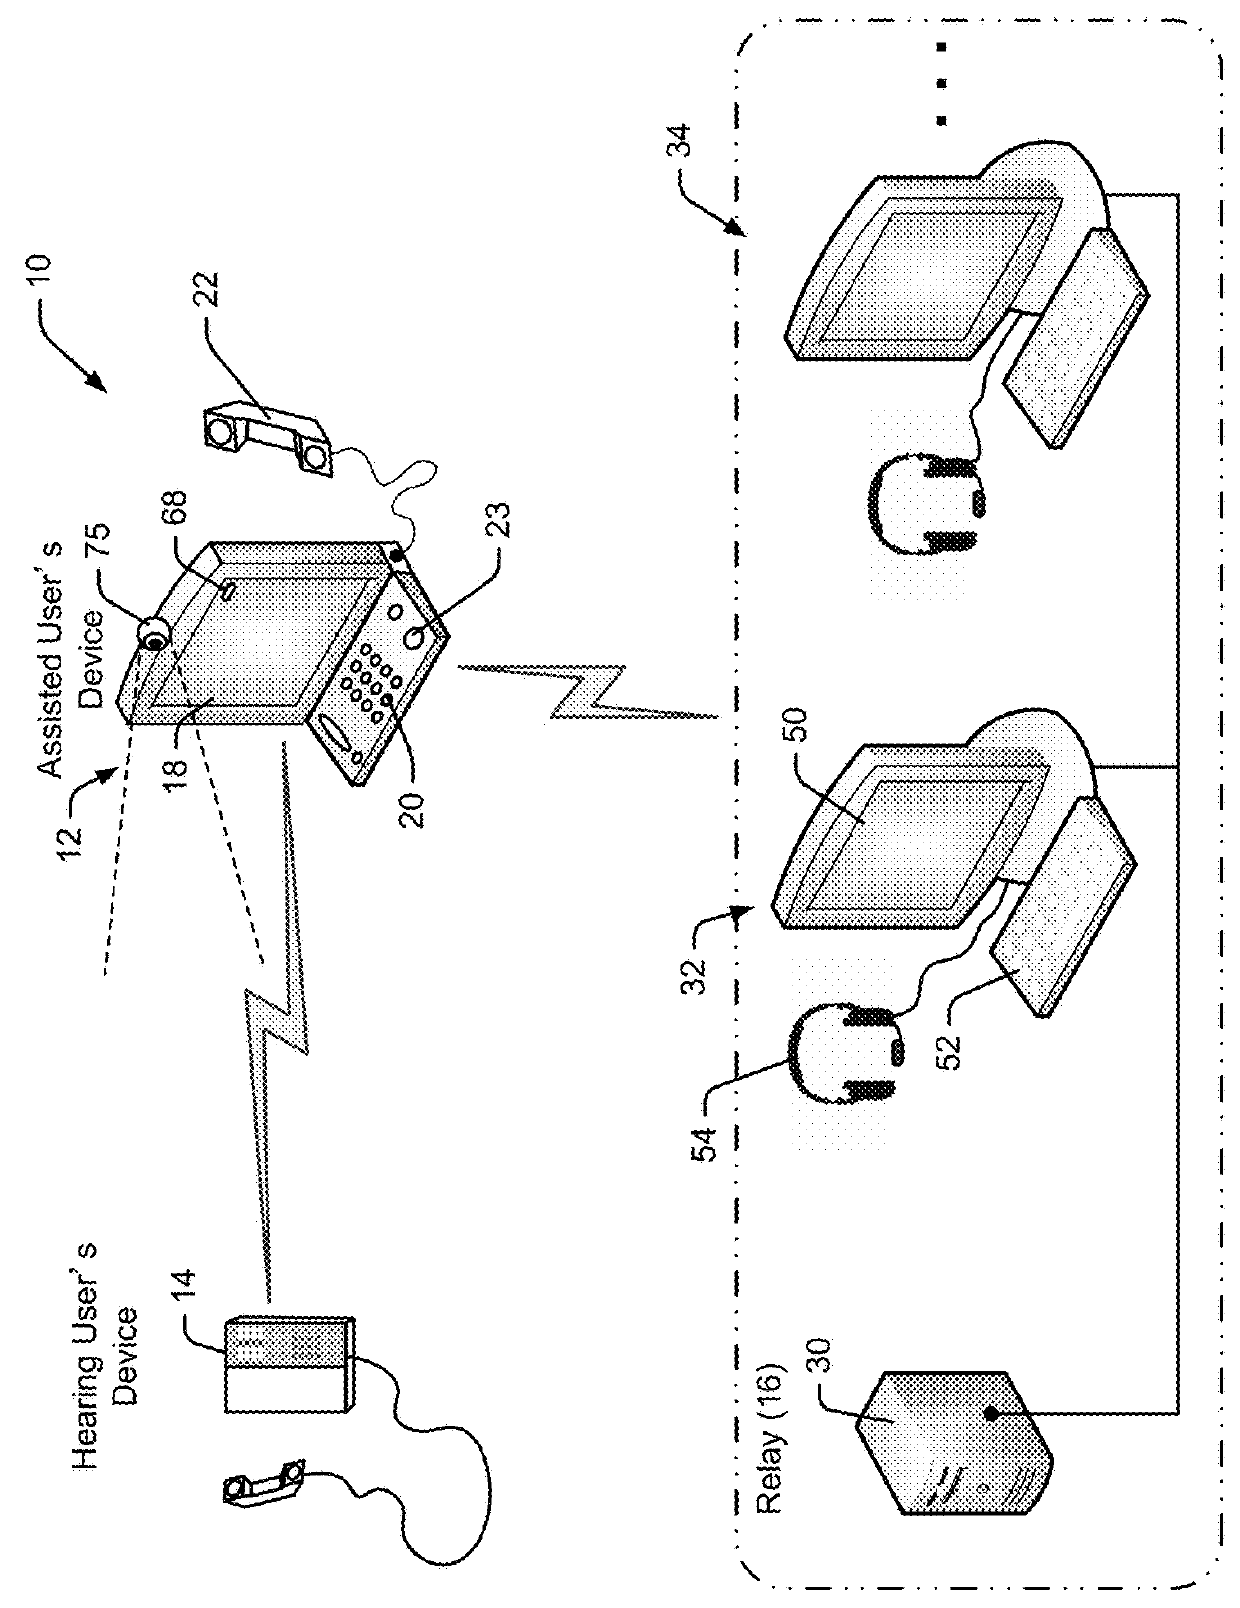 Semiautomated relay method and apparatus